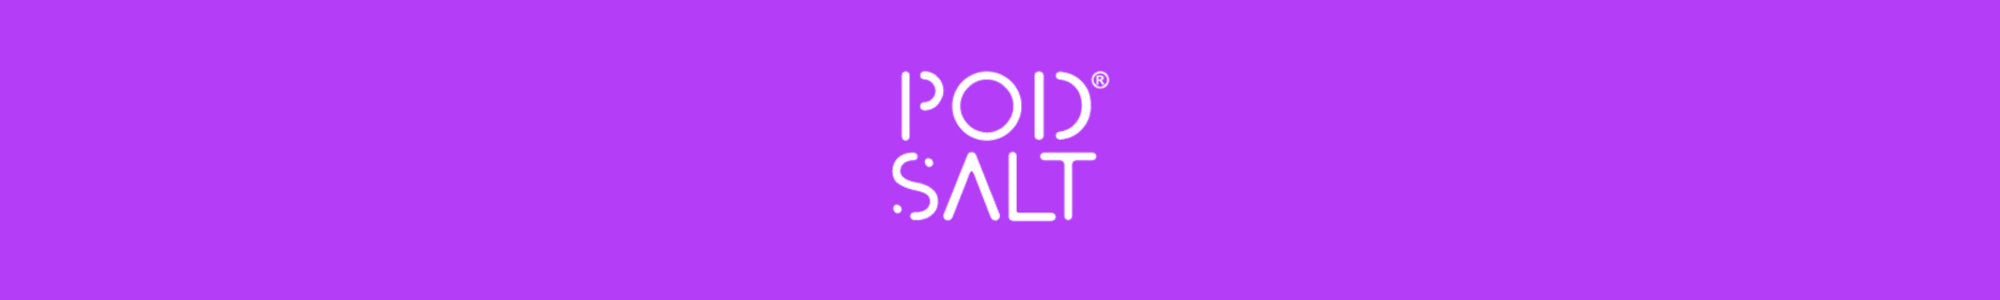 pod salt and nexus e-liquid